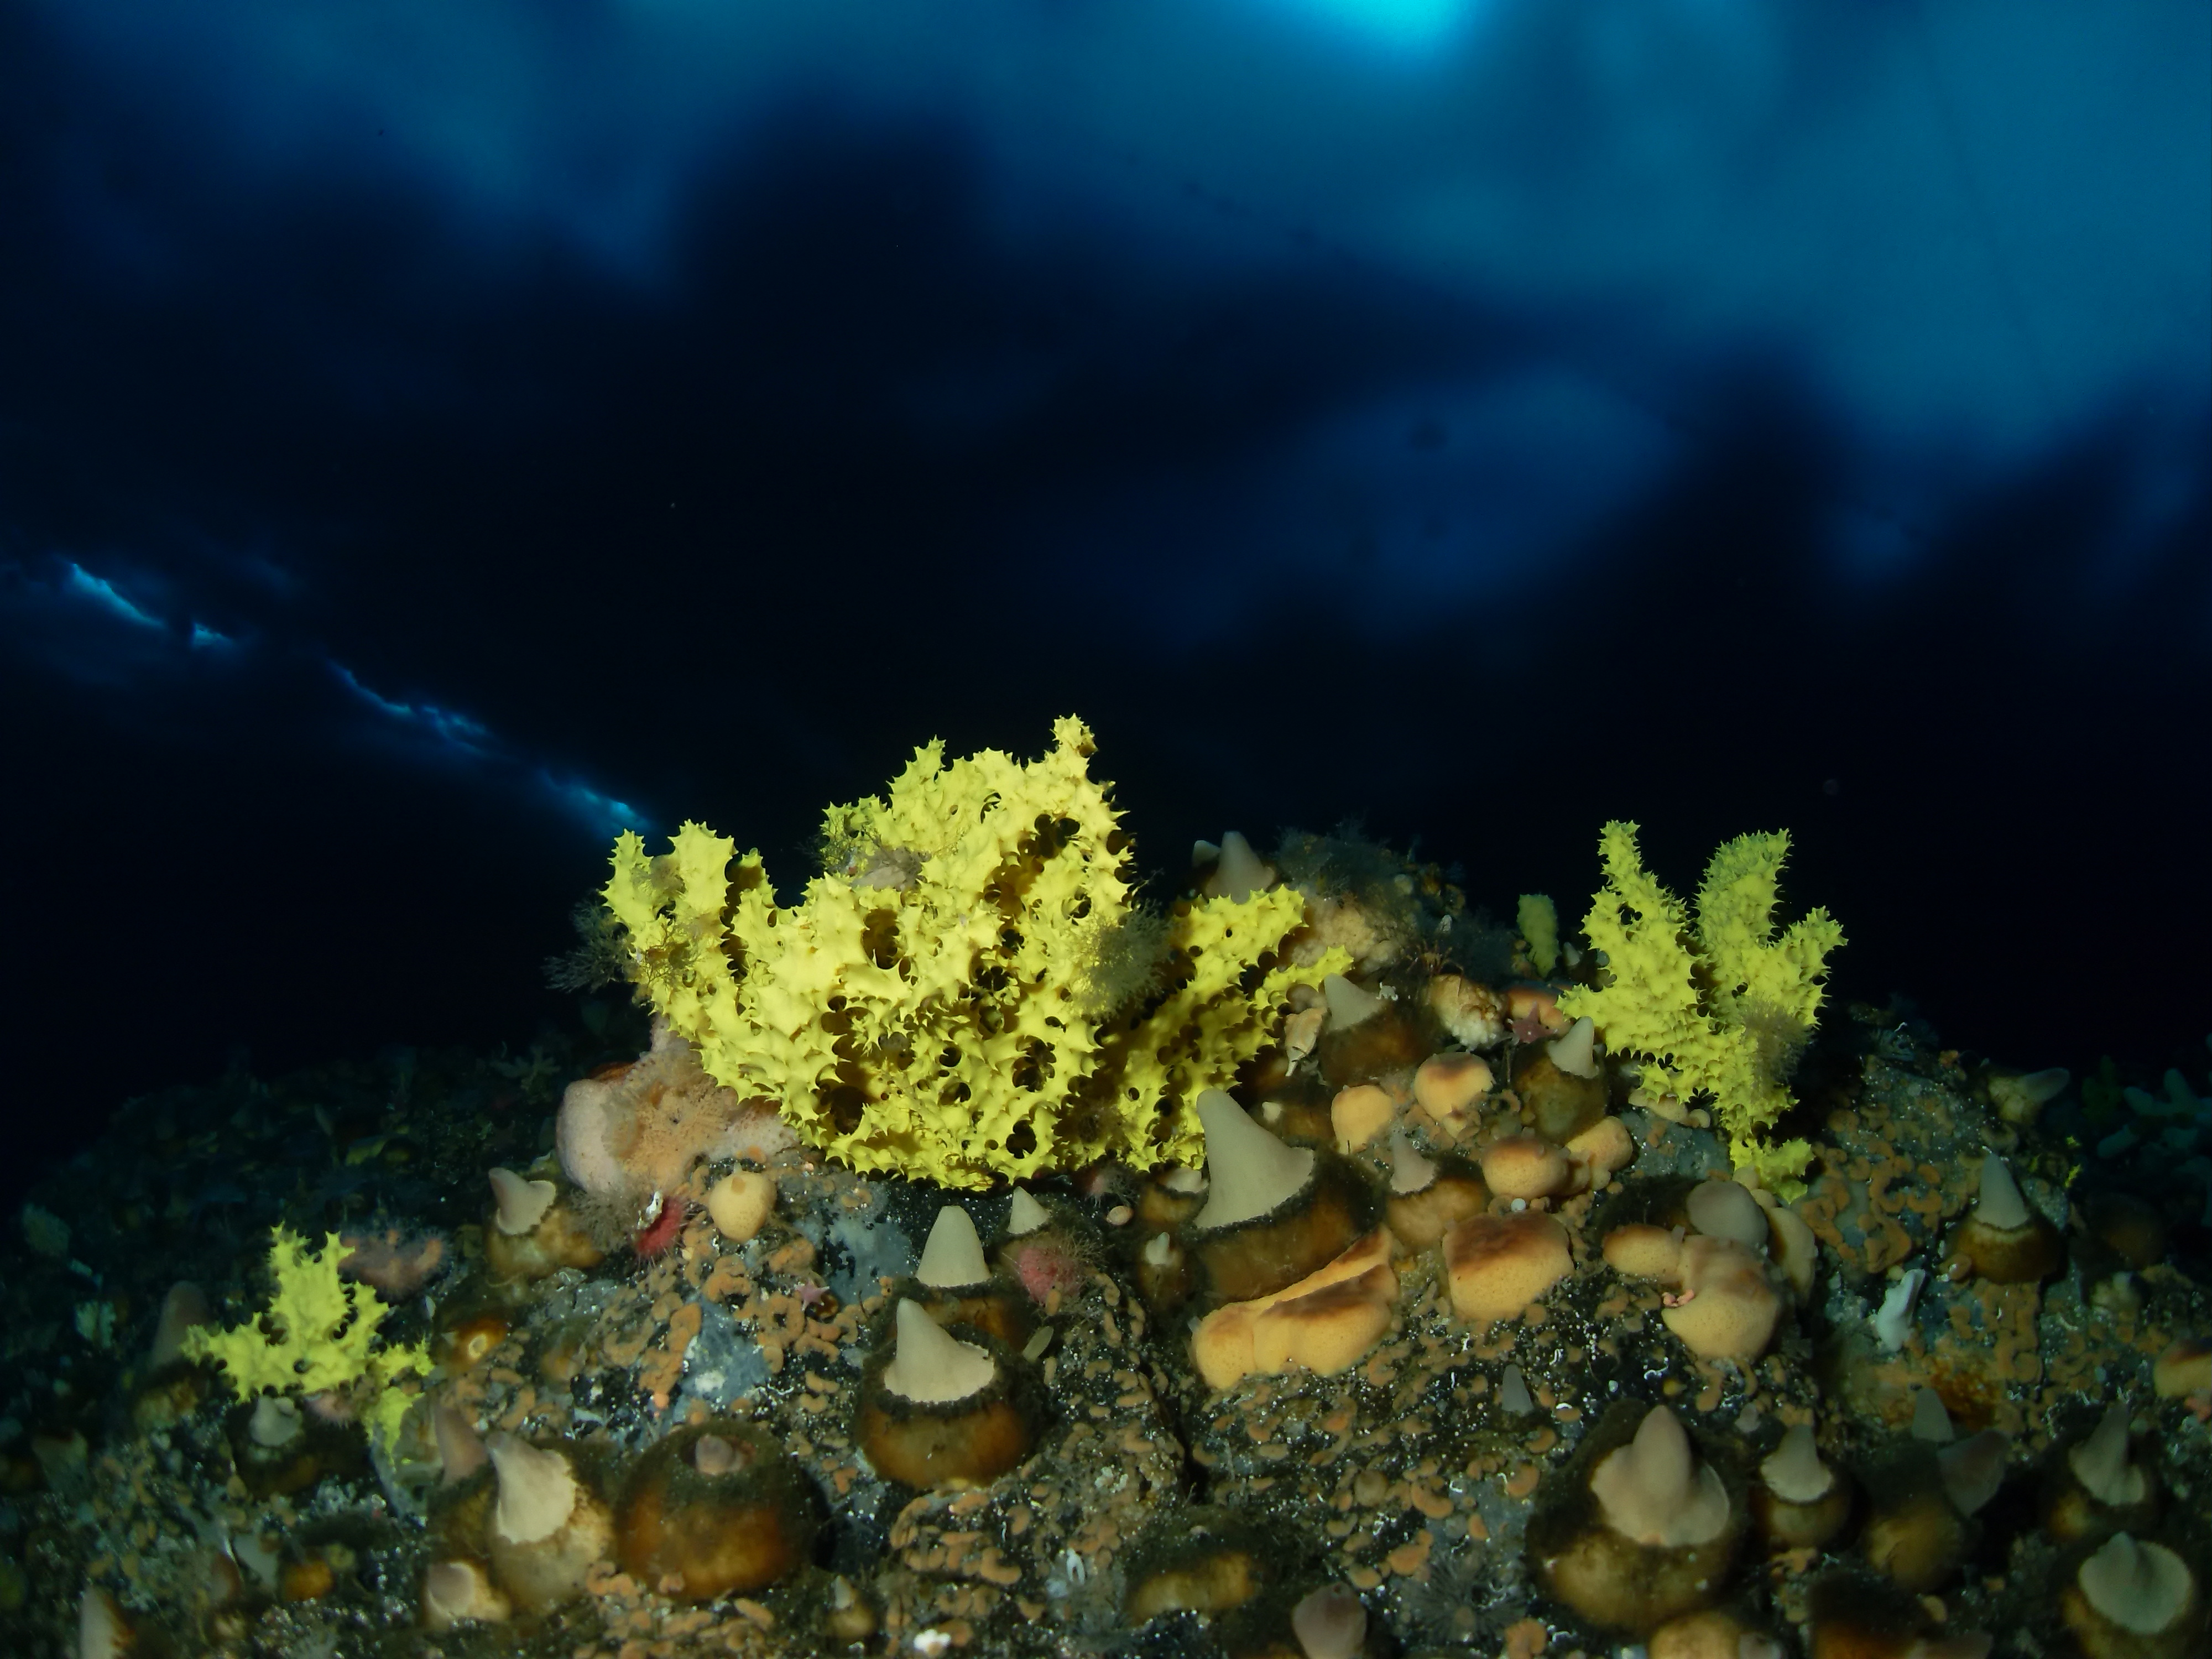 Sea sponges found on a rocky outcrop.